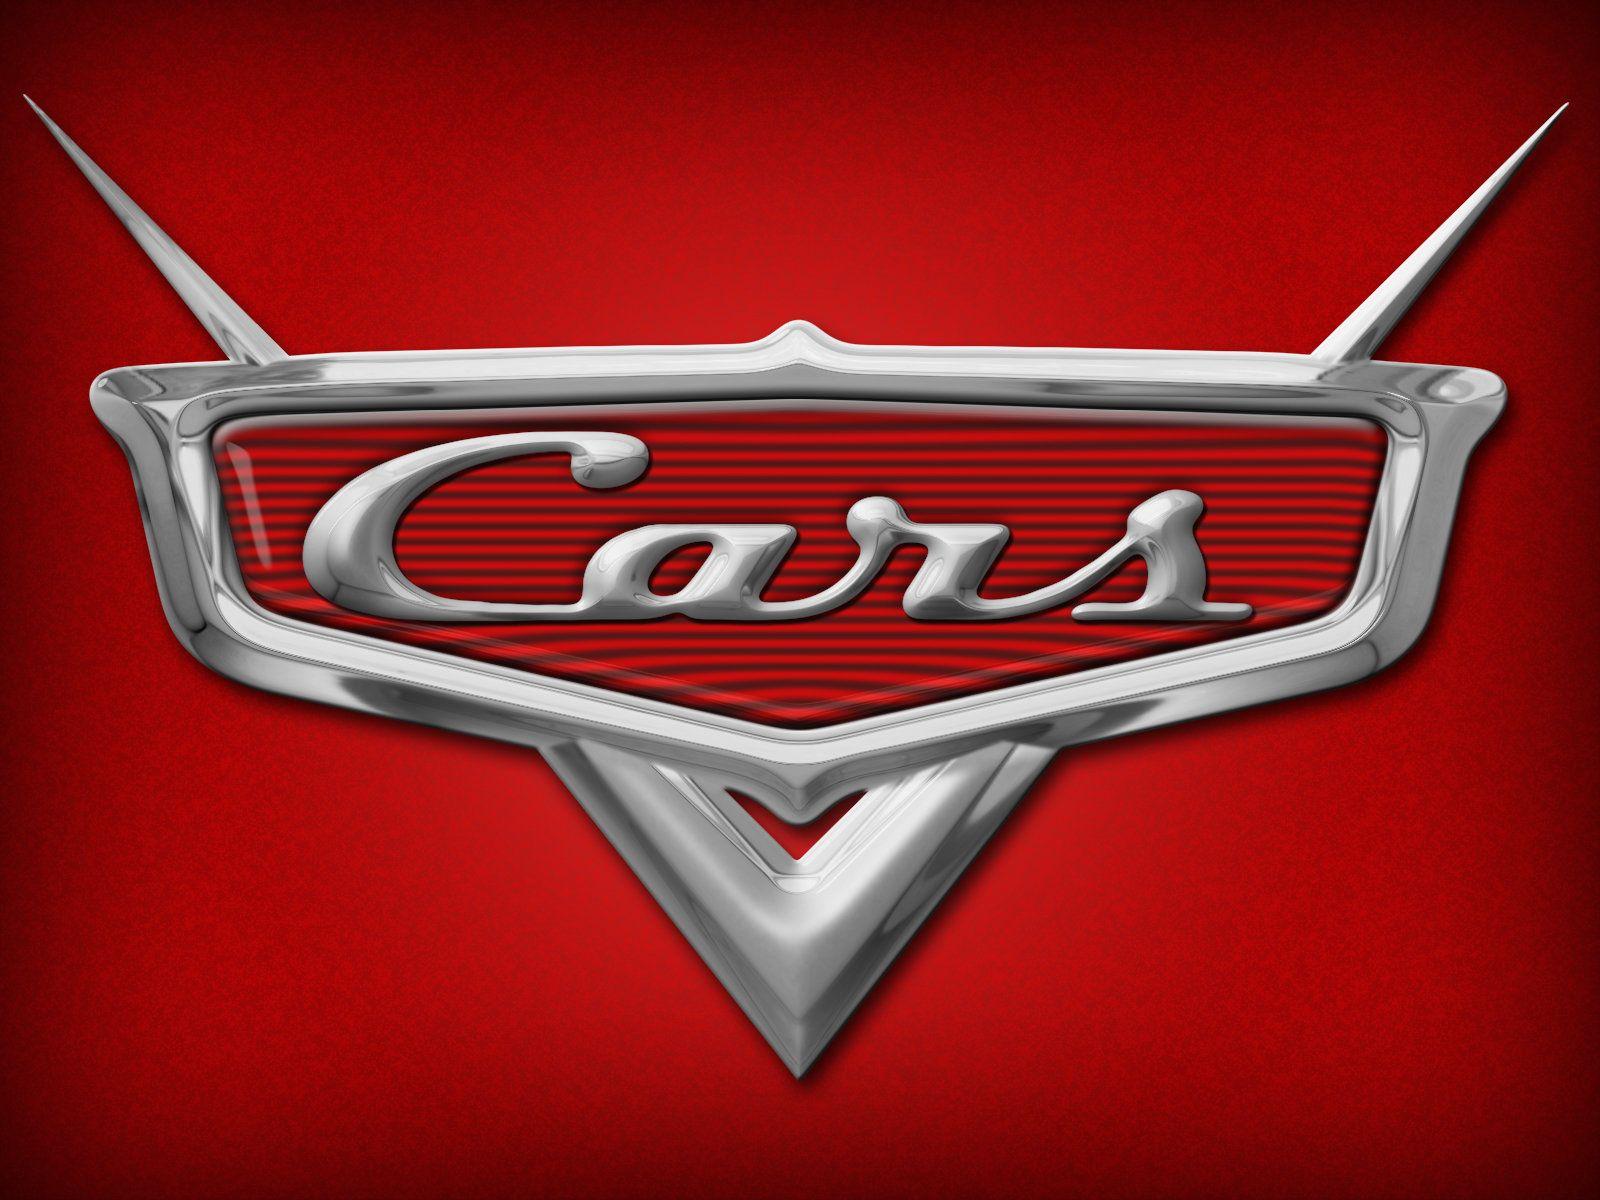 Cars Logo - Cars Logo PSD by vicing on DeviantArt